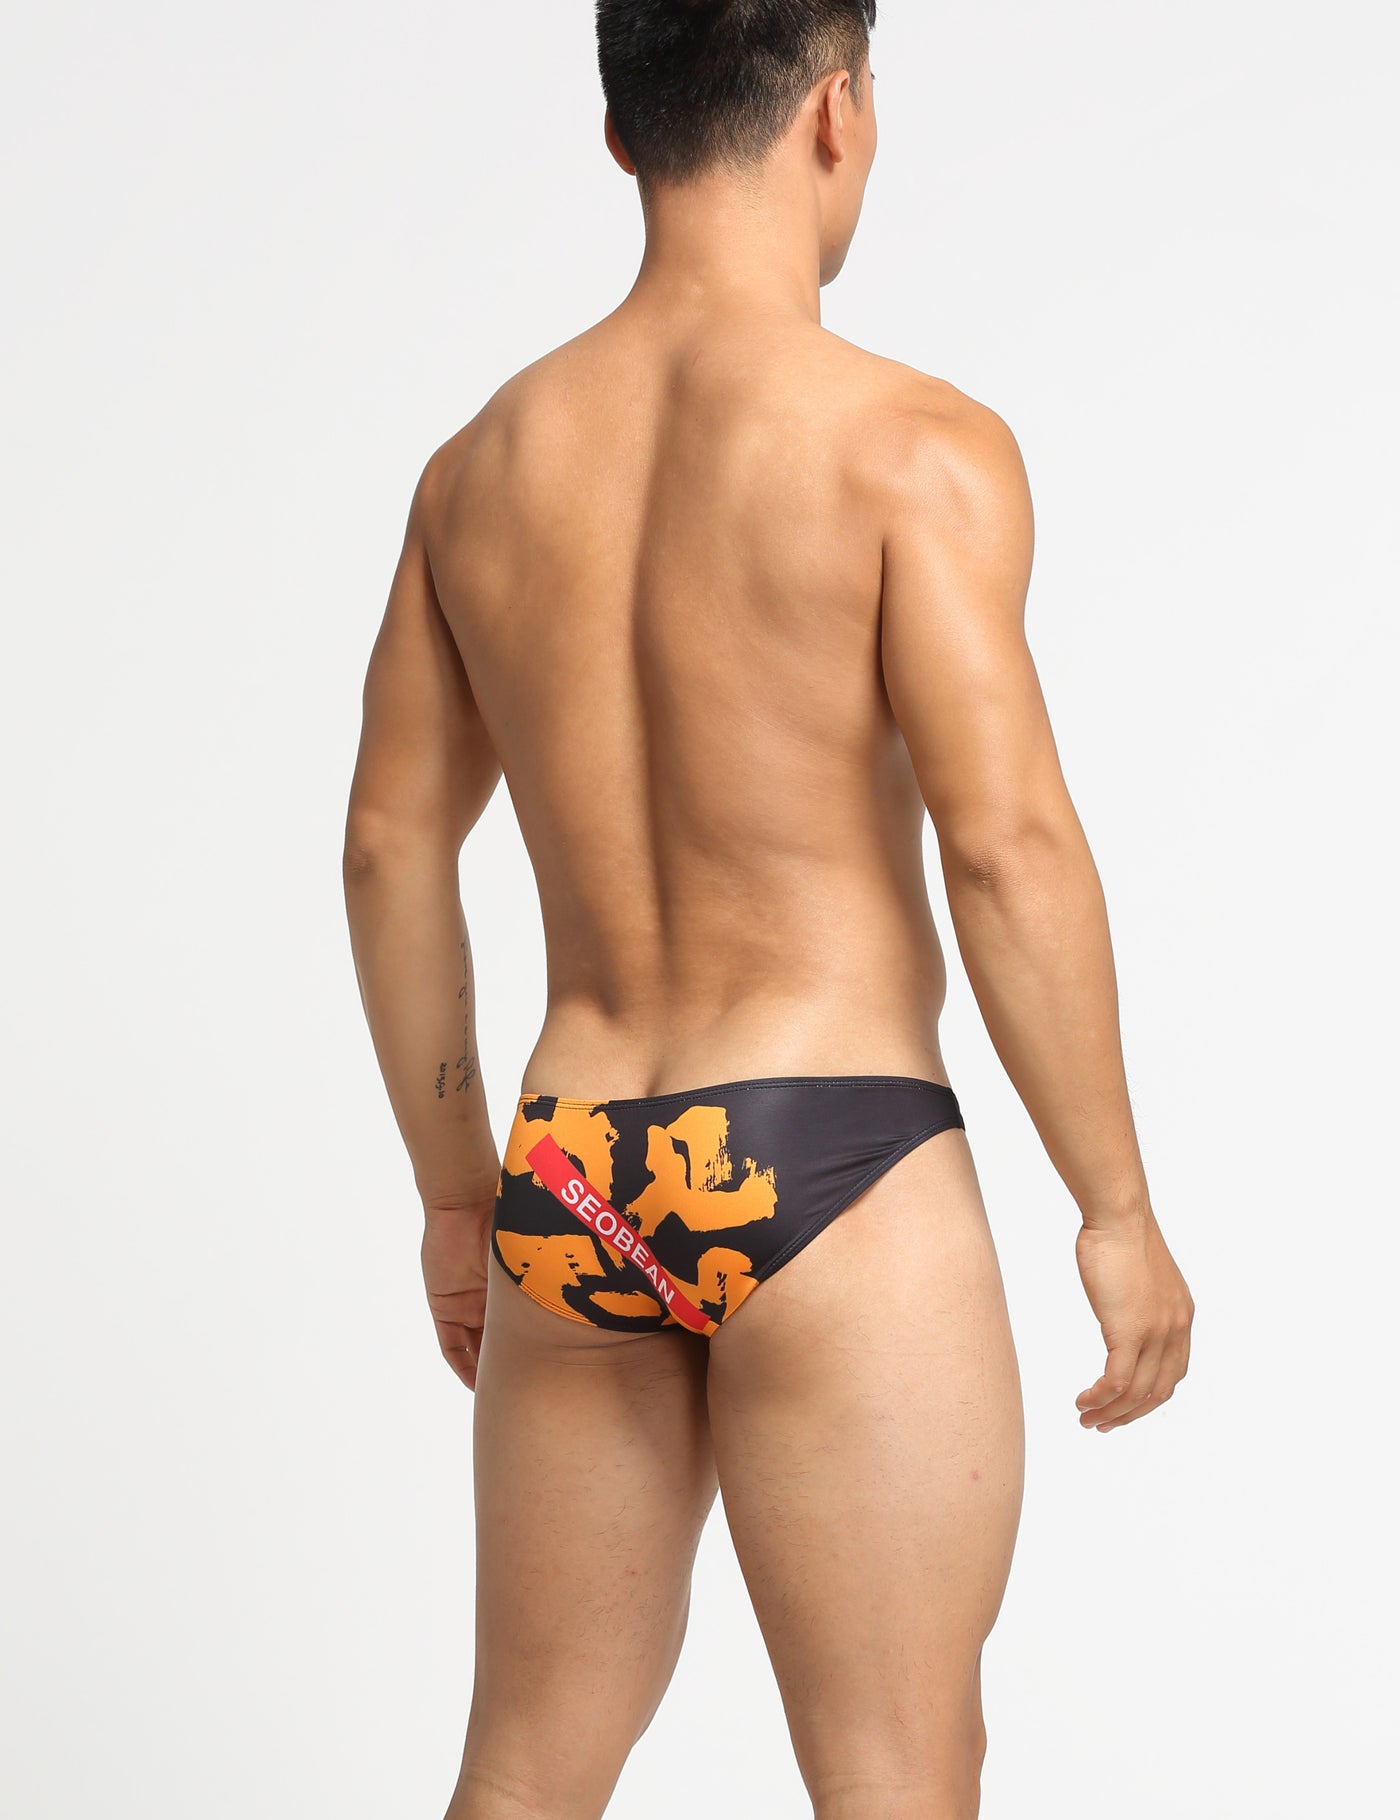 SEOBEAN Mens Sexy Super Low Rise Bikini Briefs Underwear 00104 Brown  M(28-30) at  Men's Clothing store